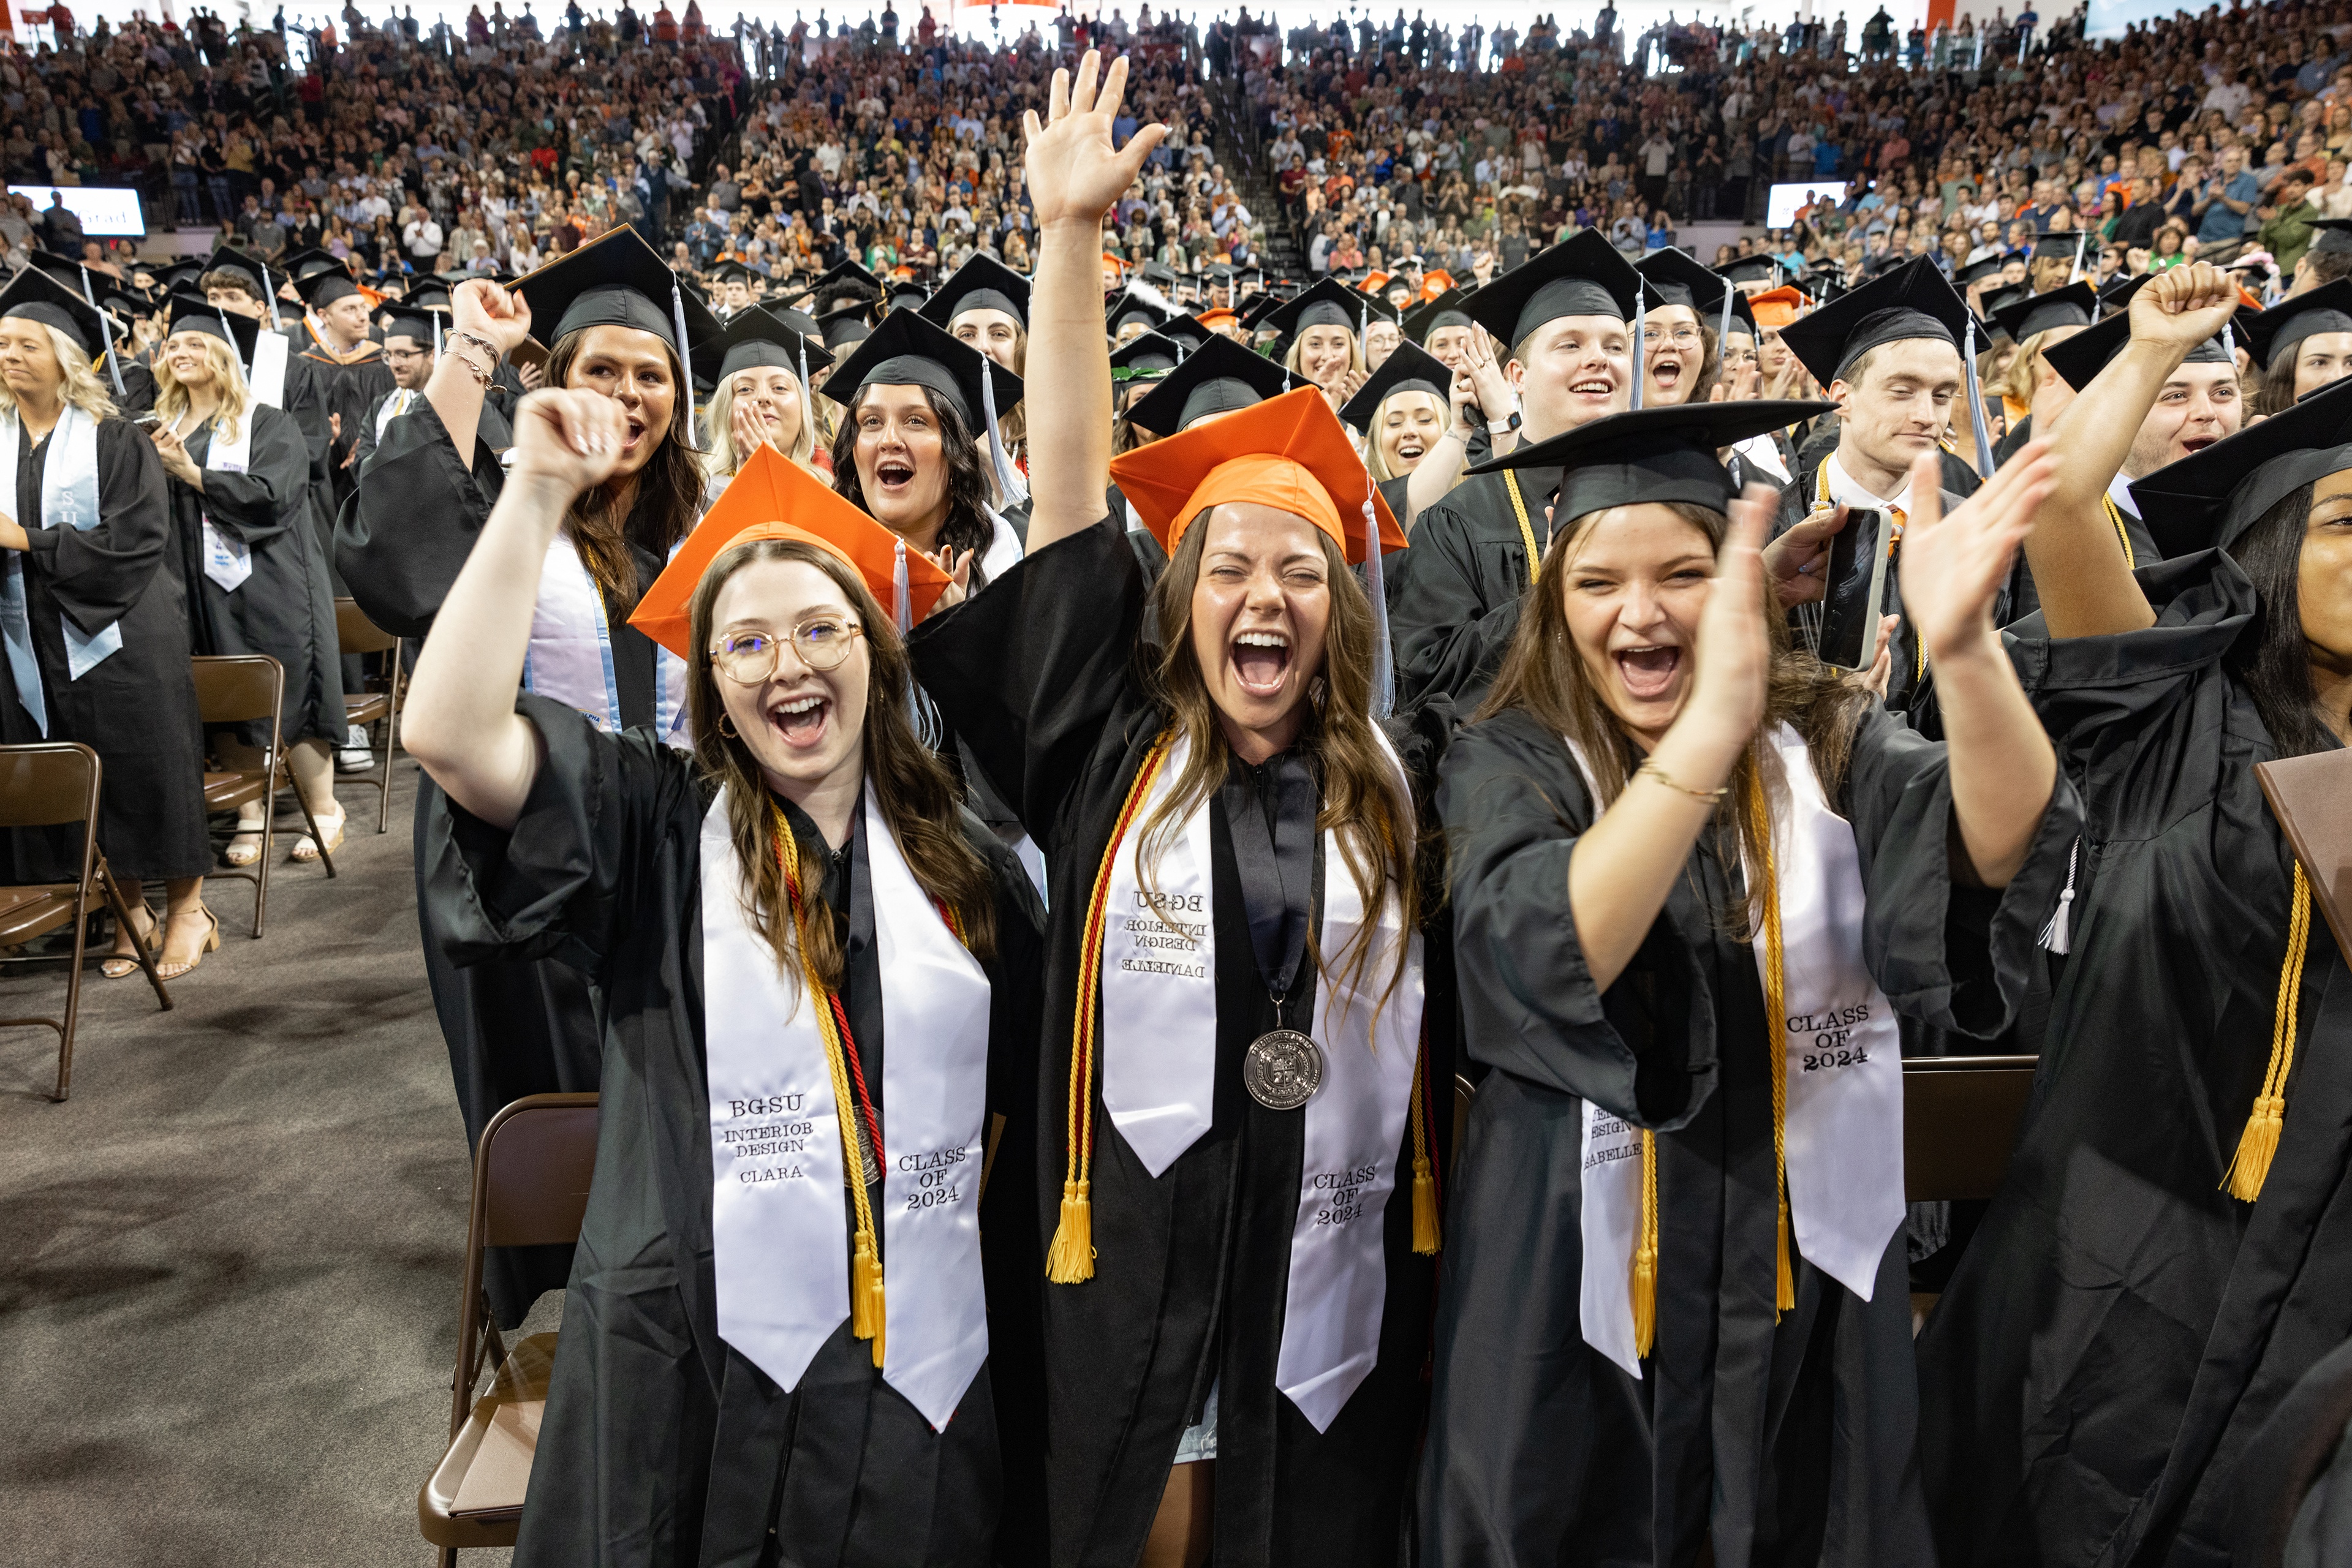 Three female graduates cheer among a crowd of graduates